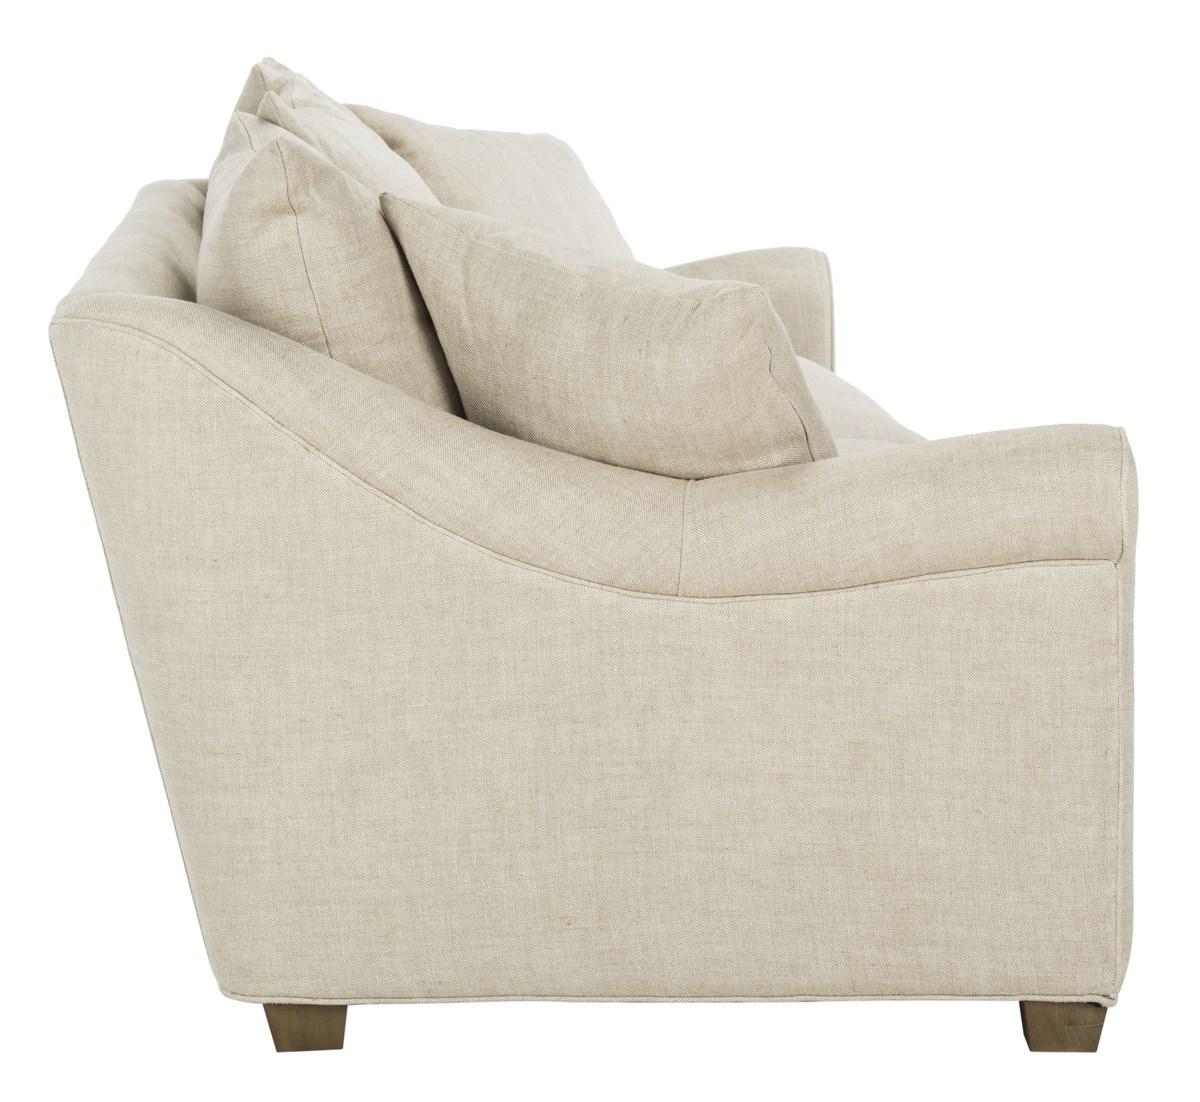 Frasier Linen Sofa - Natural - Arlo Home - Image 2